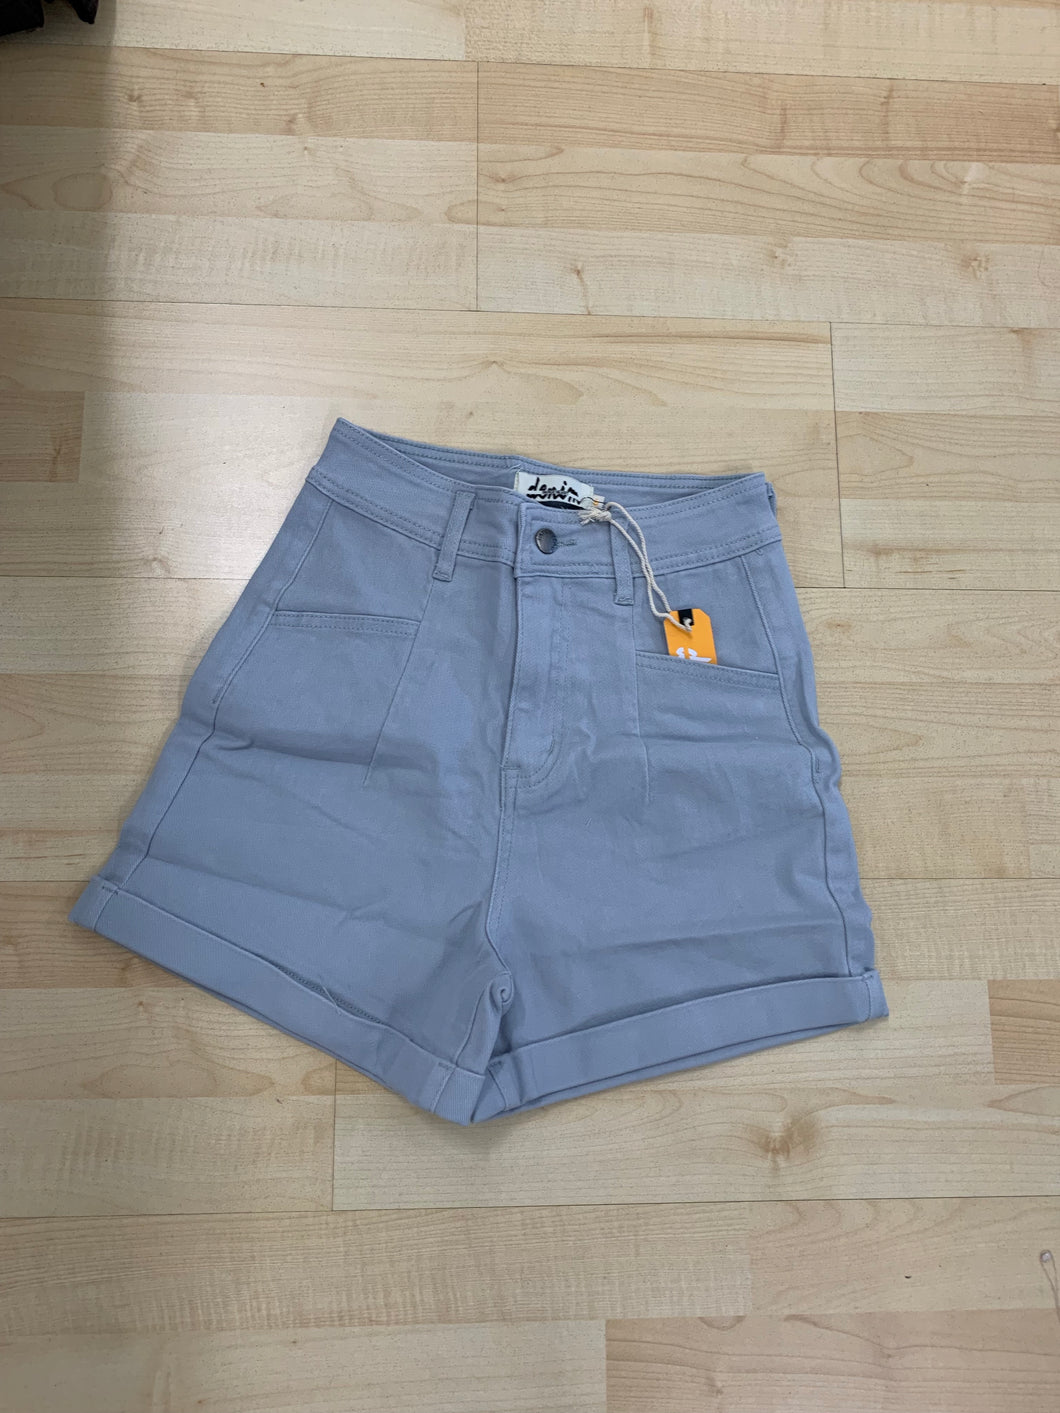 9013 shorts